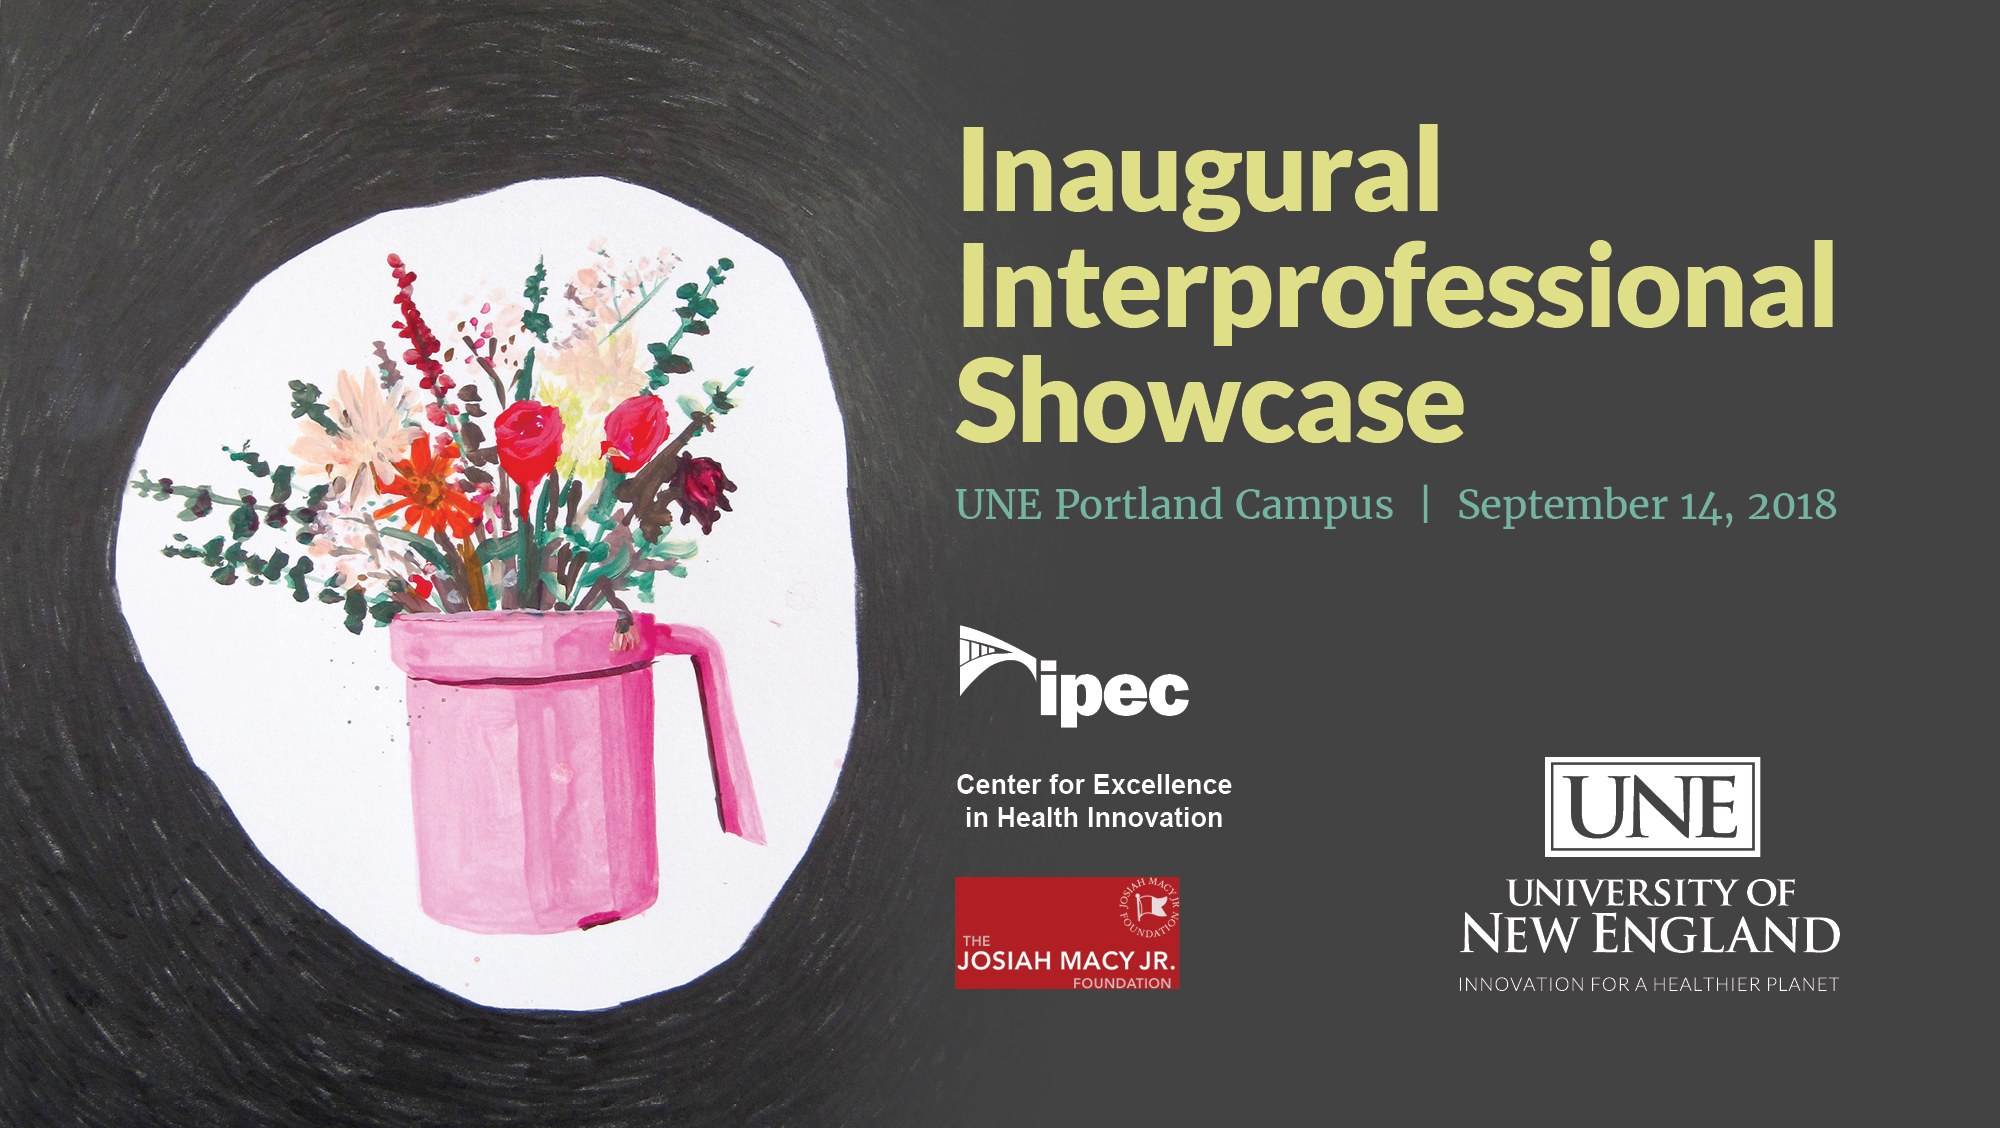 Opening slide of the Inaugural interprofessional showcase presentation